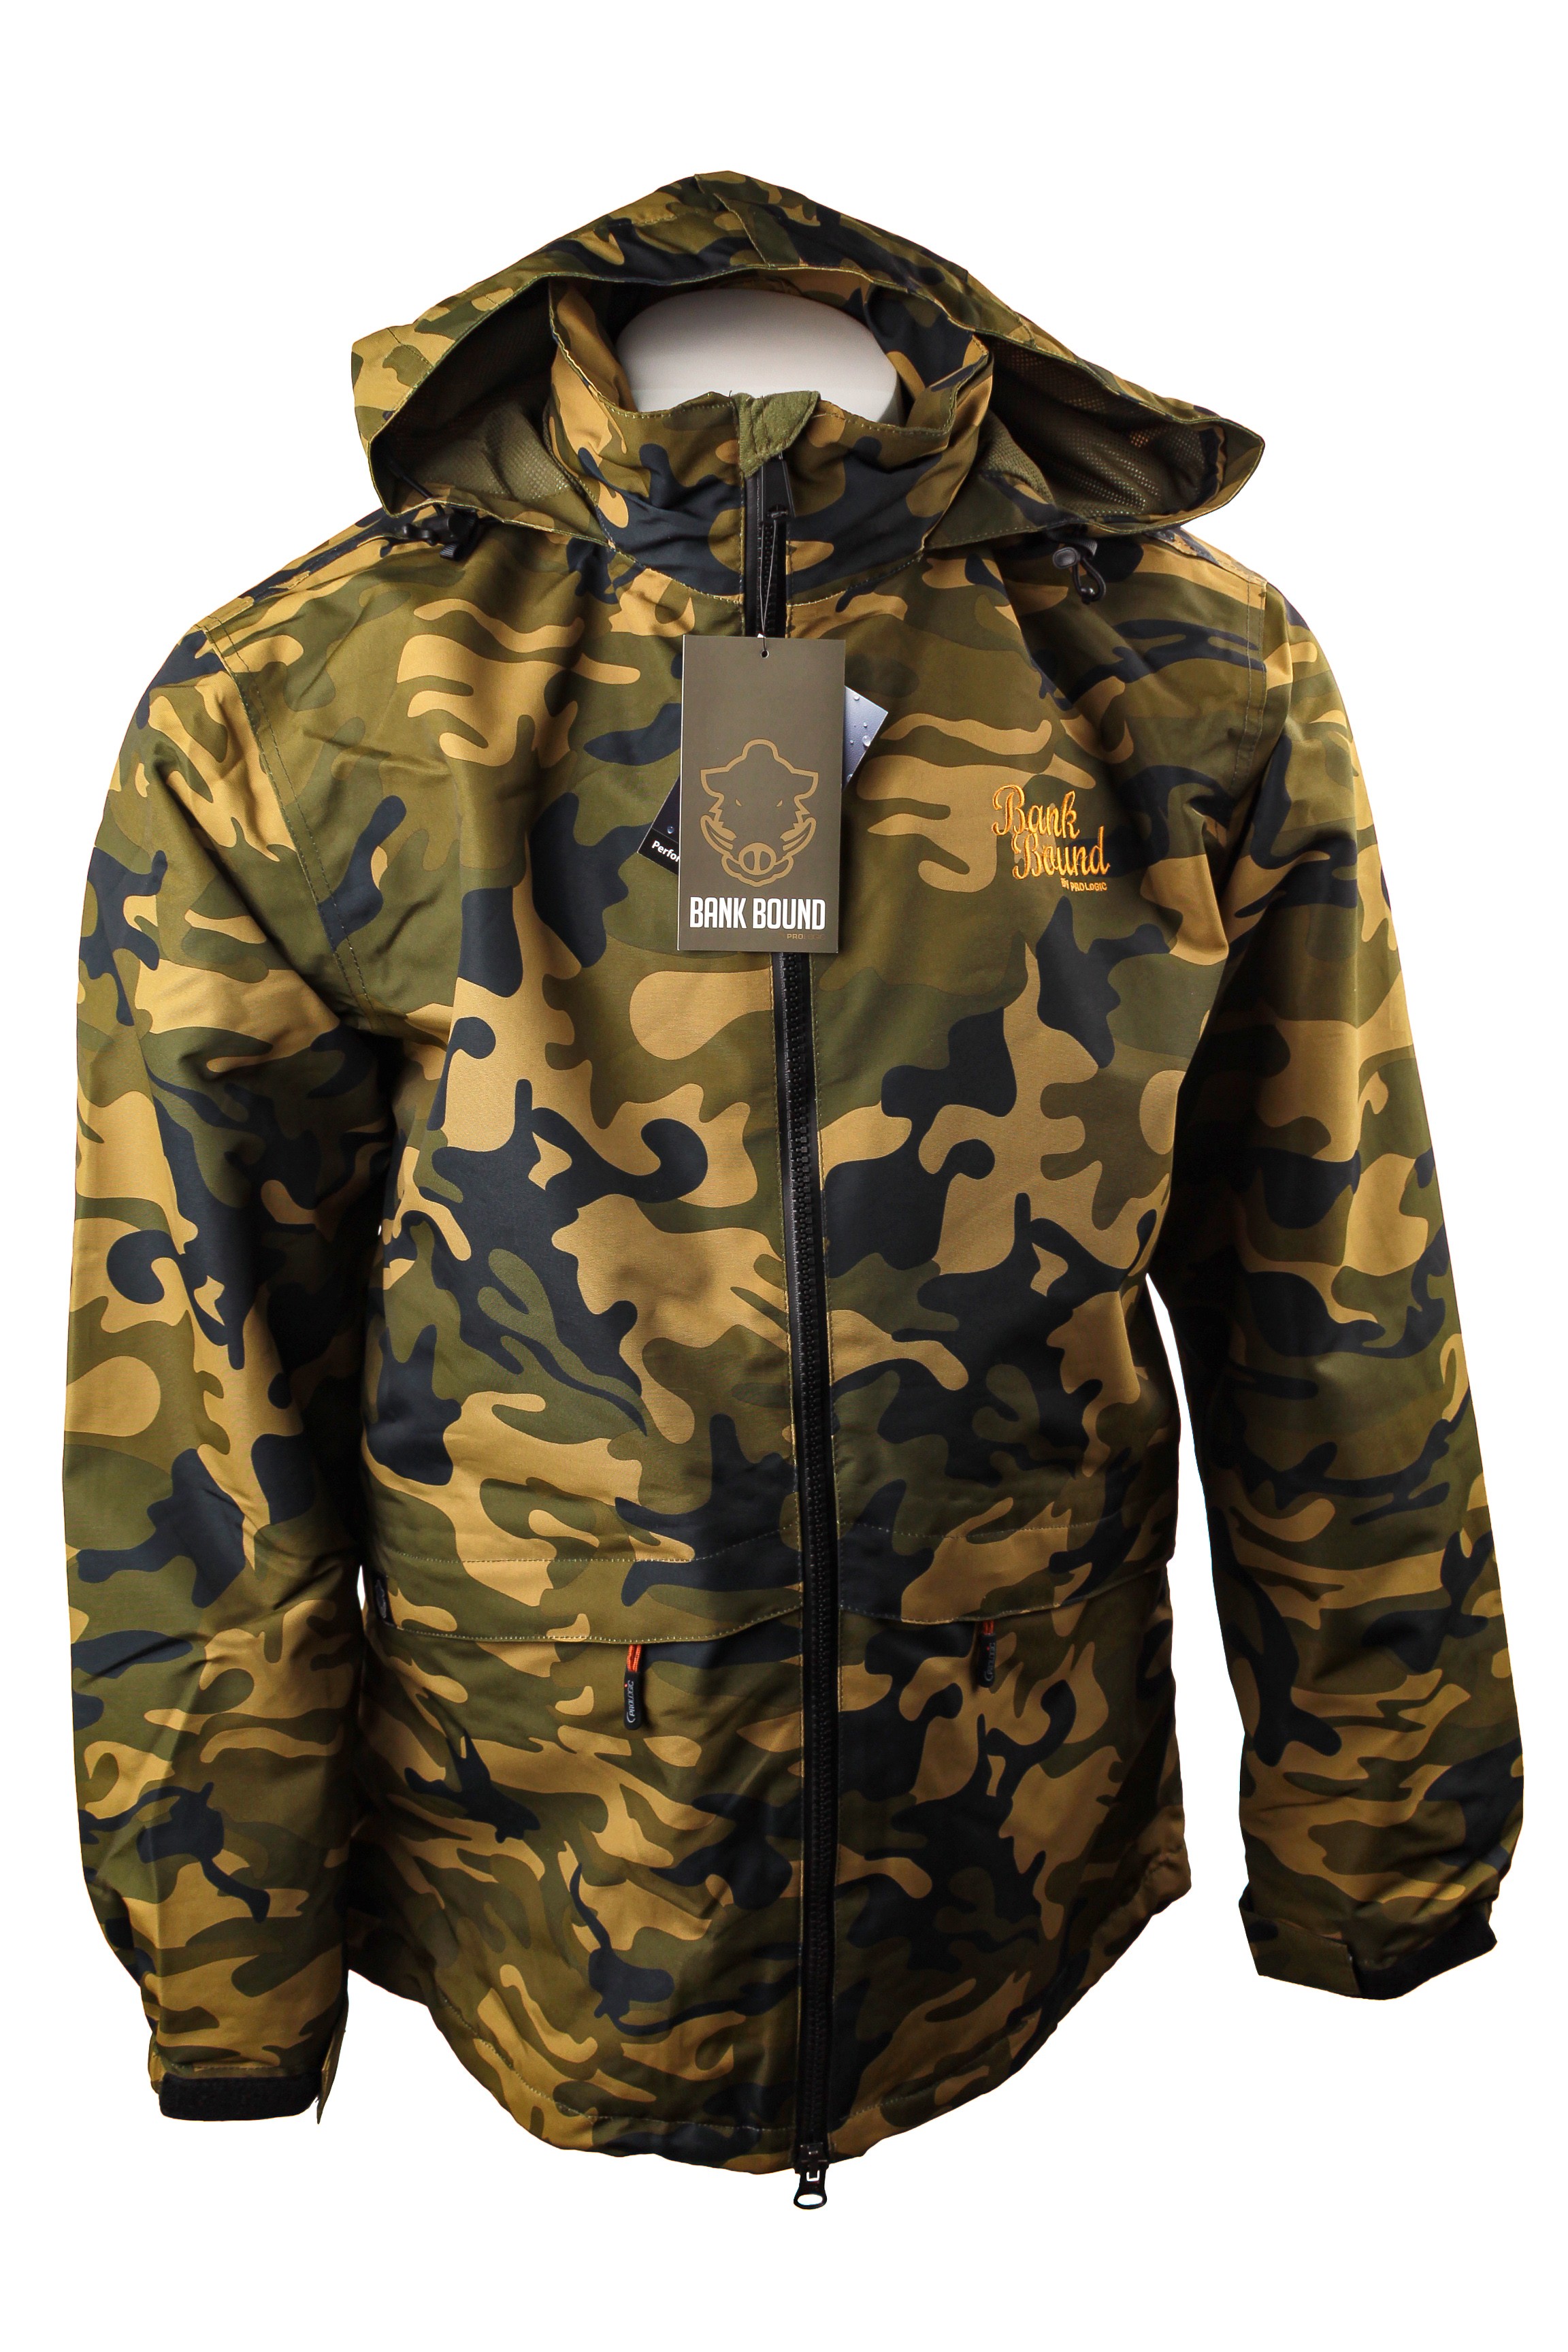 Куртка Prologic Bank bound 3-season camo fishing jacket